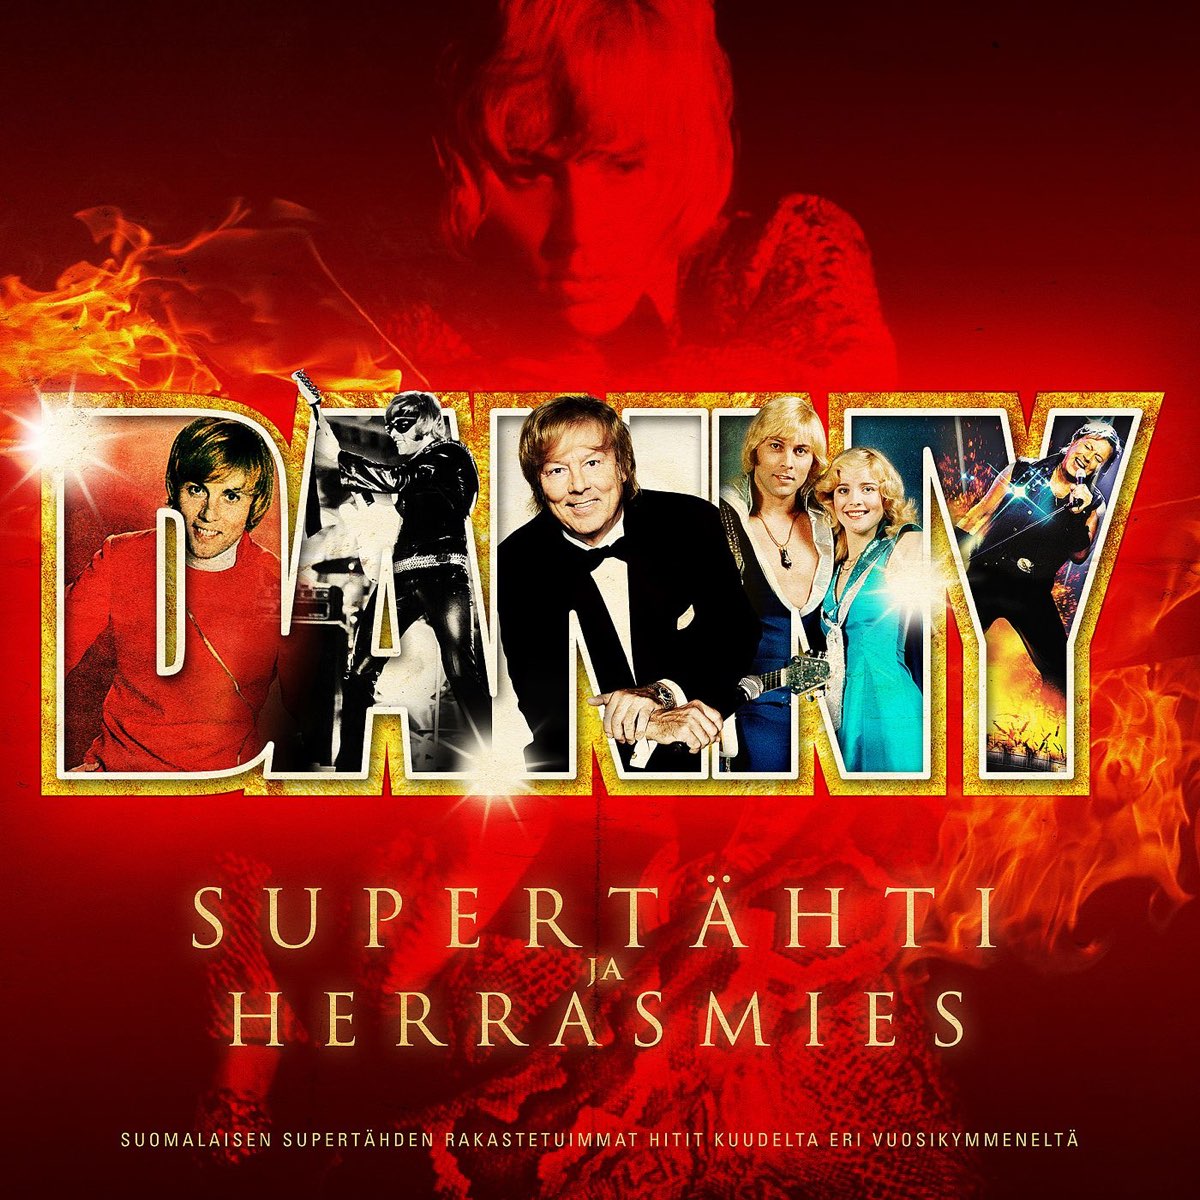 Supertähti Ja Herrasmies by Danny on Apple Music